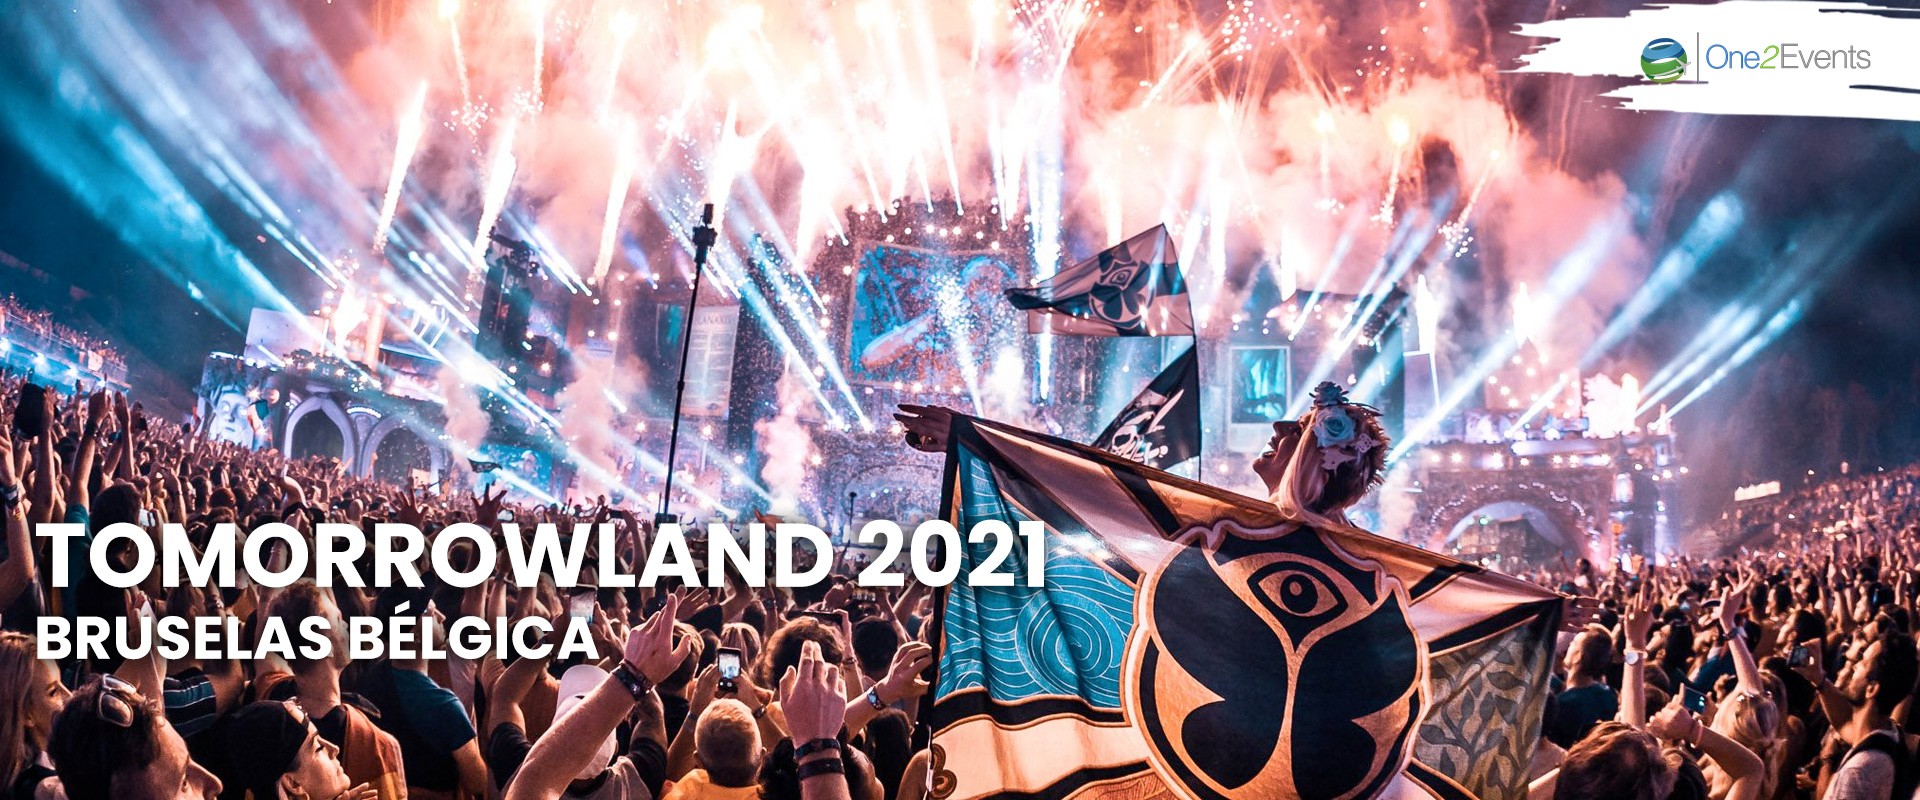 Tomorrowland 2021